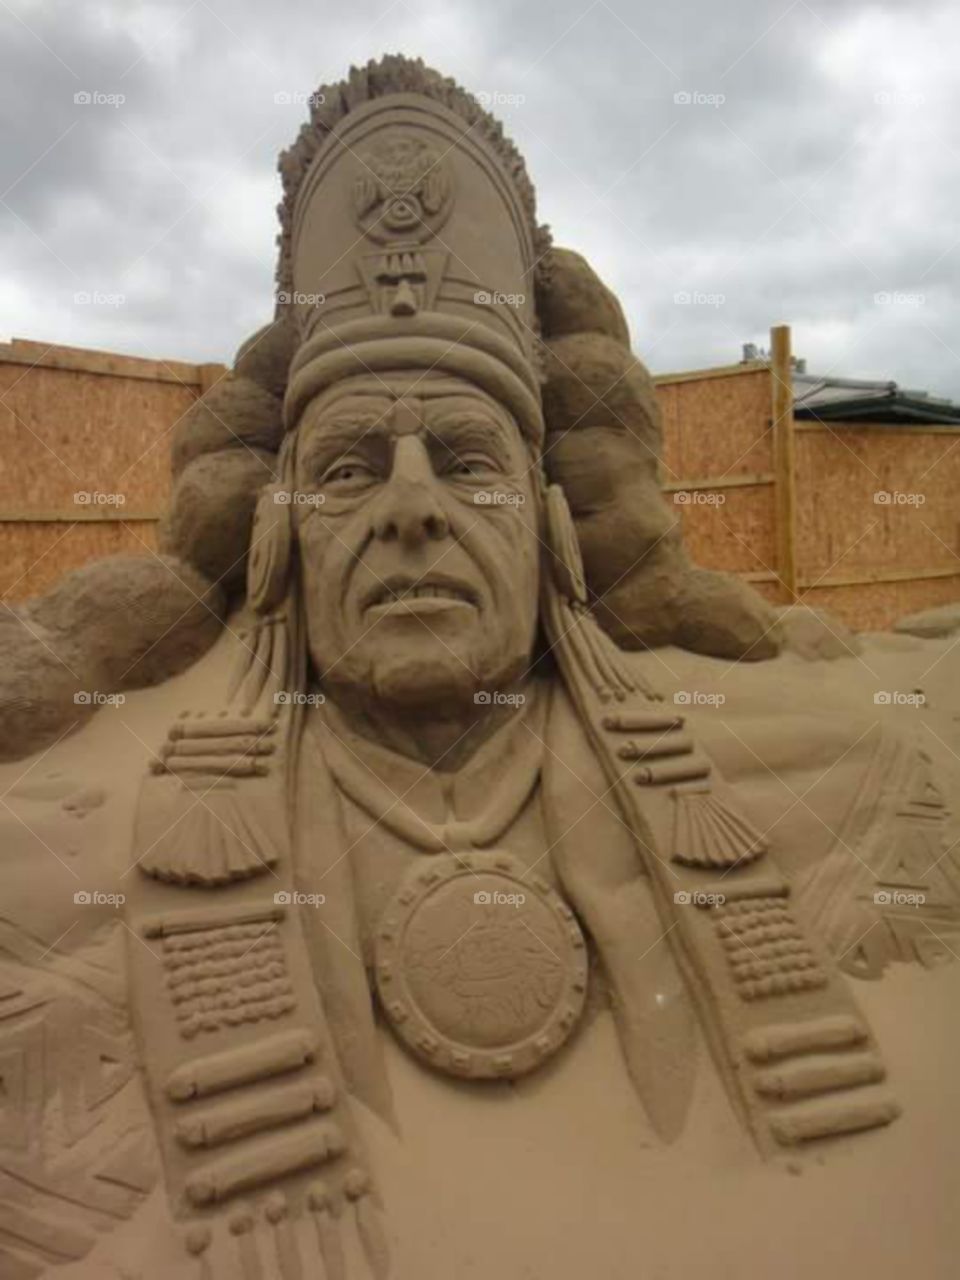 native American man sand sculpture